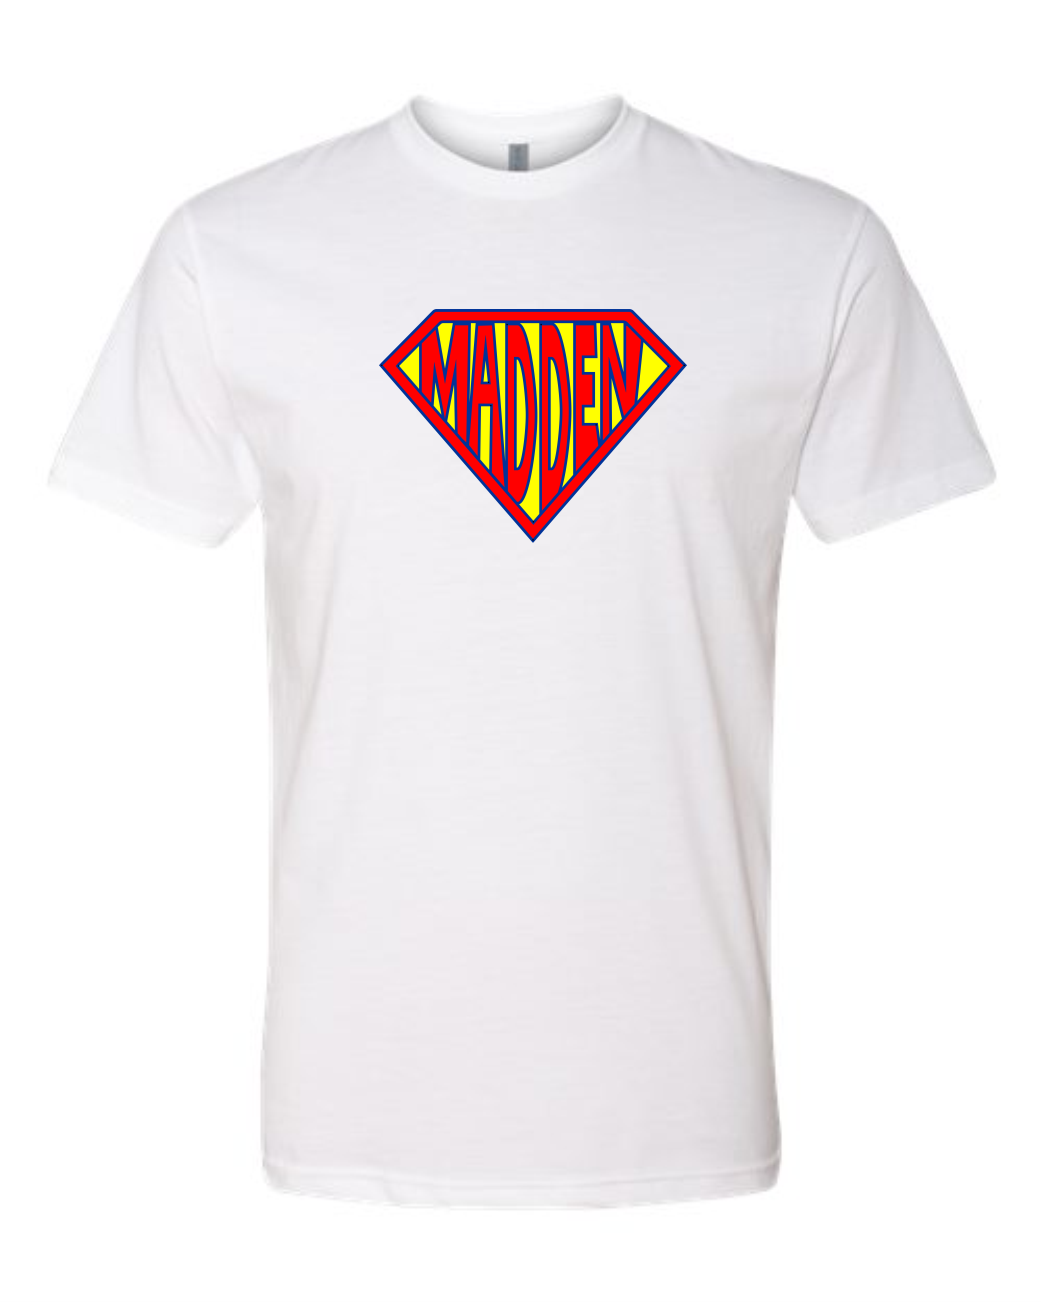 Superhero Madden - Youth Next Level T-shirt